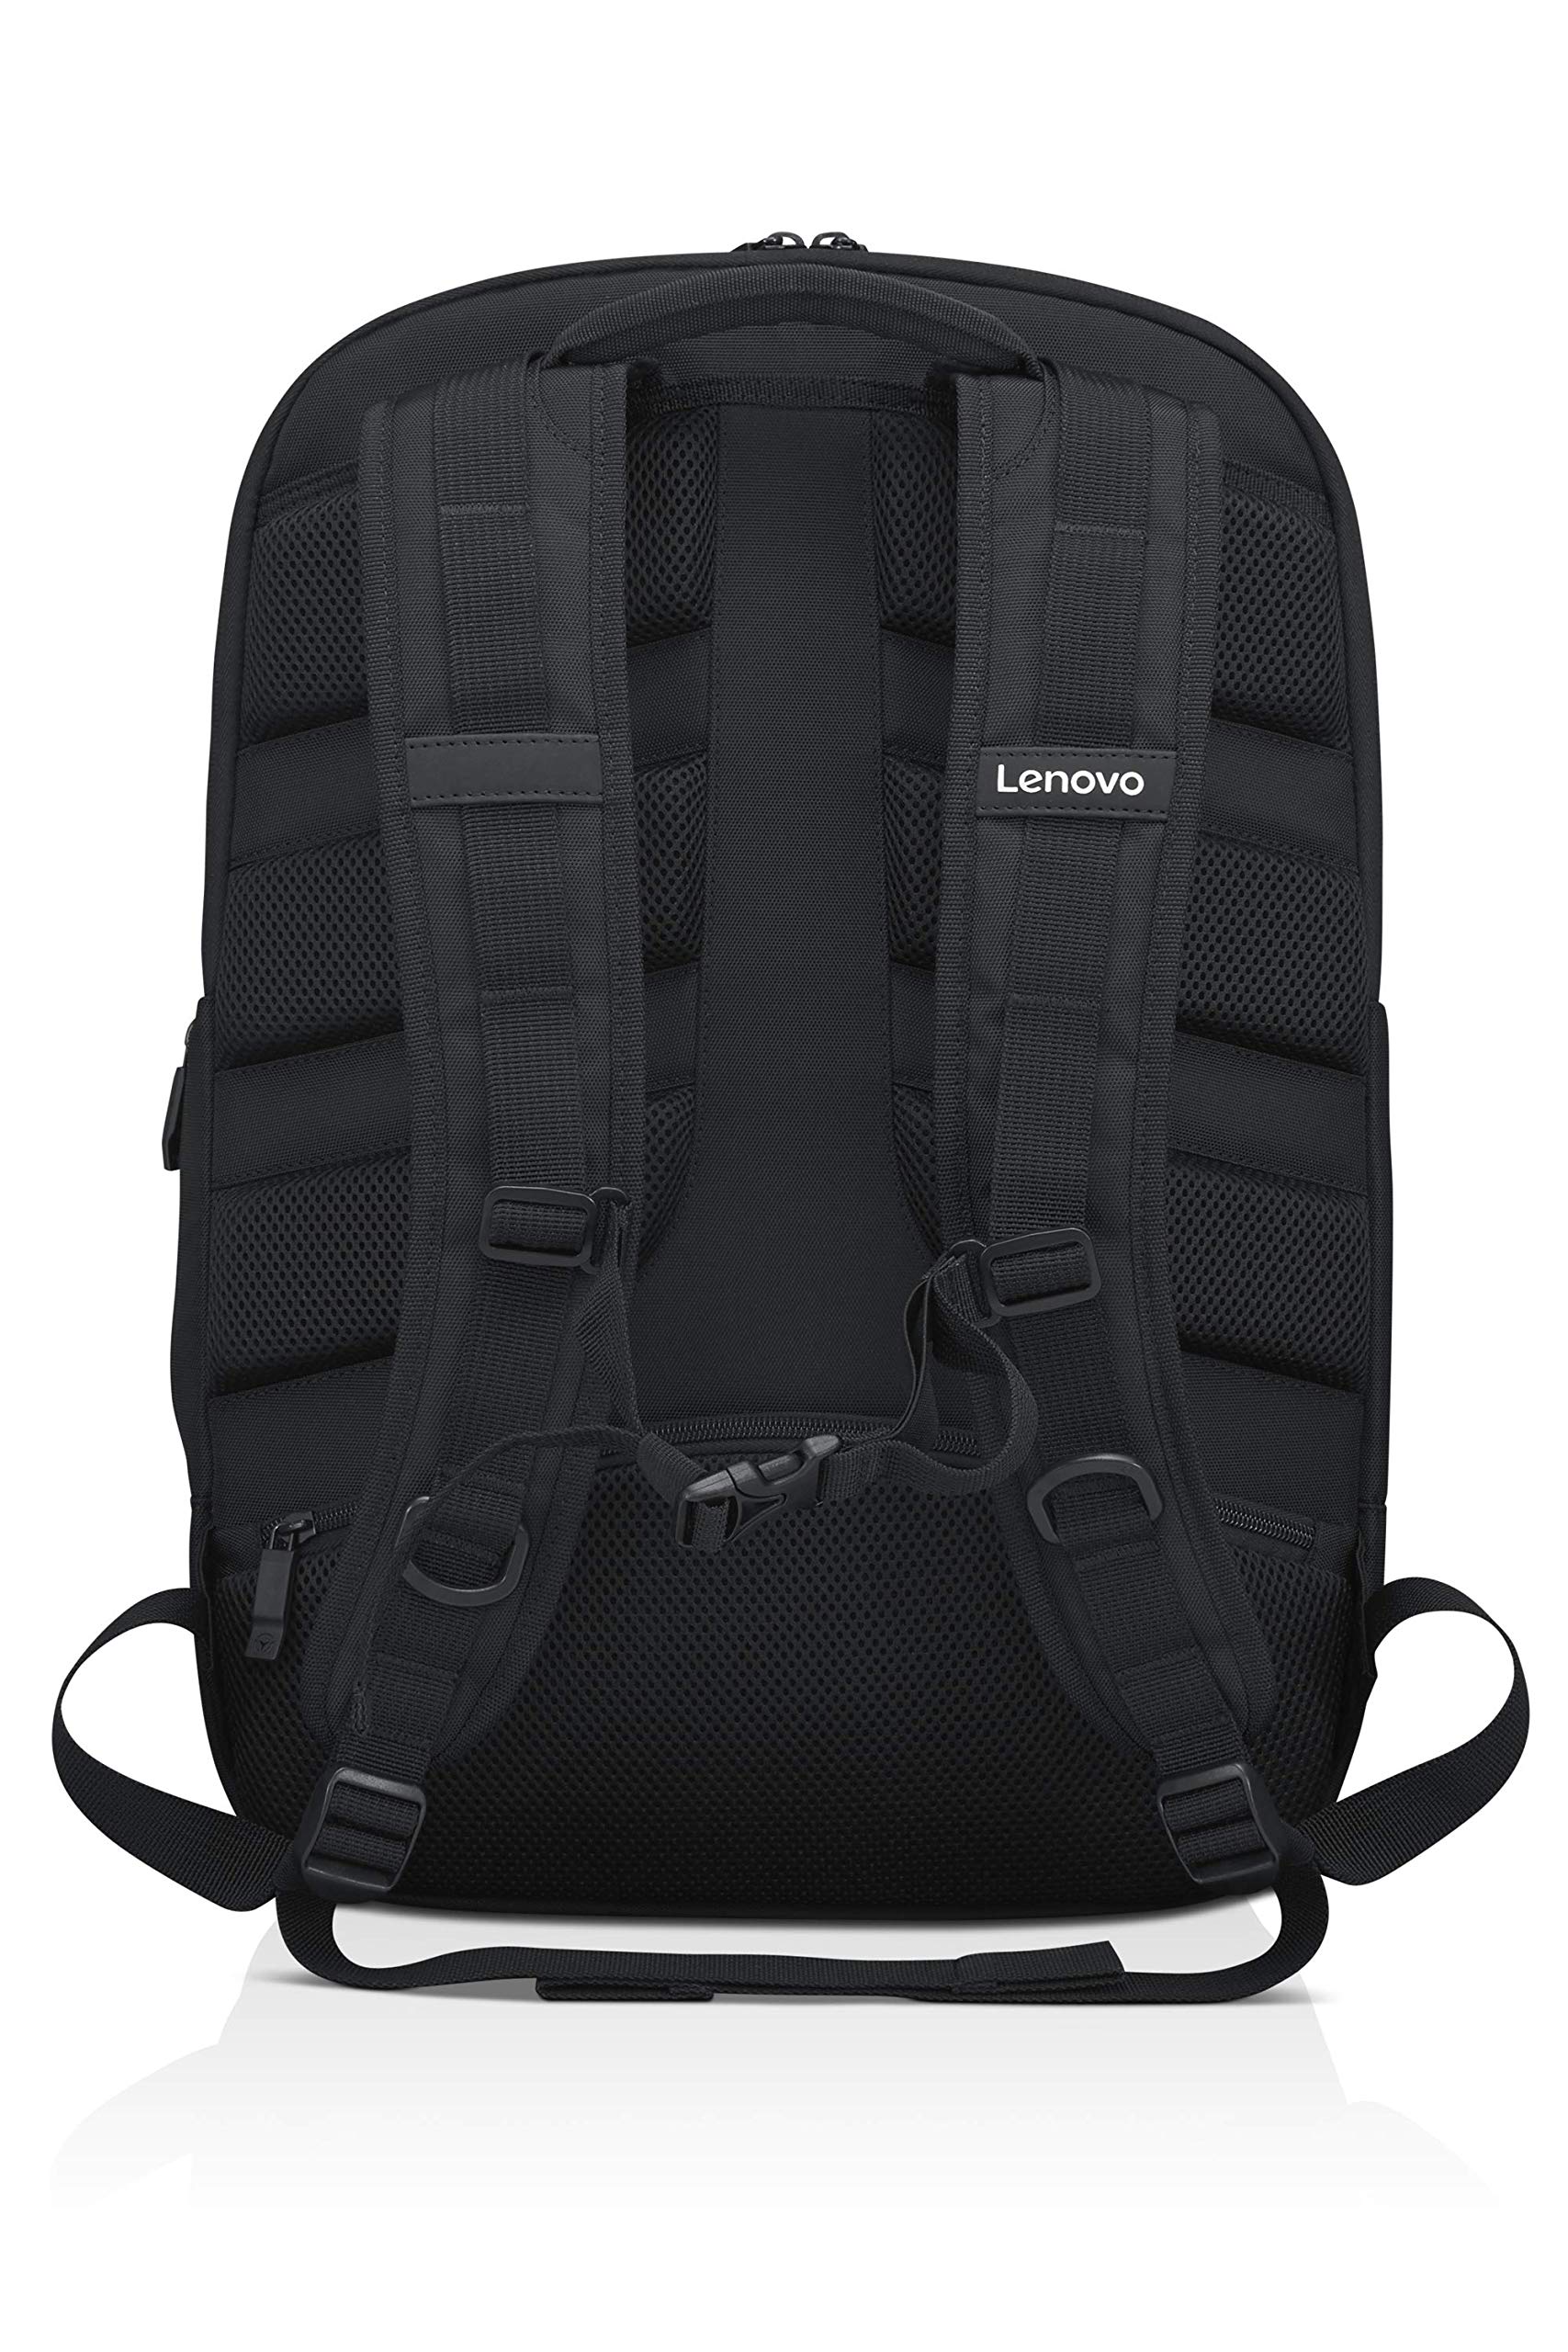 Lenovo Legion Gaming Laptop Bag, Double-Layered Protection, Dedicated Storage Pockets